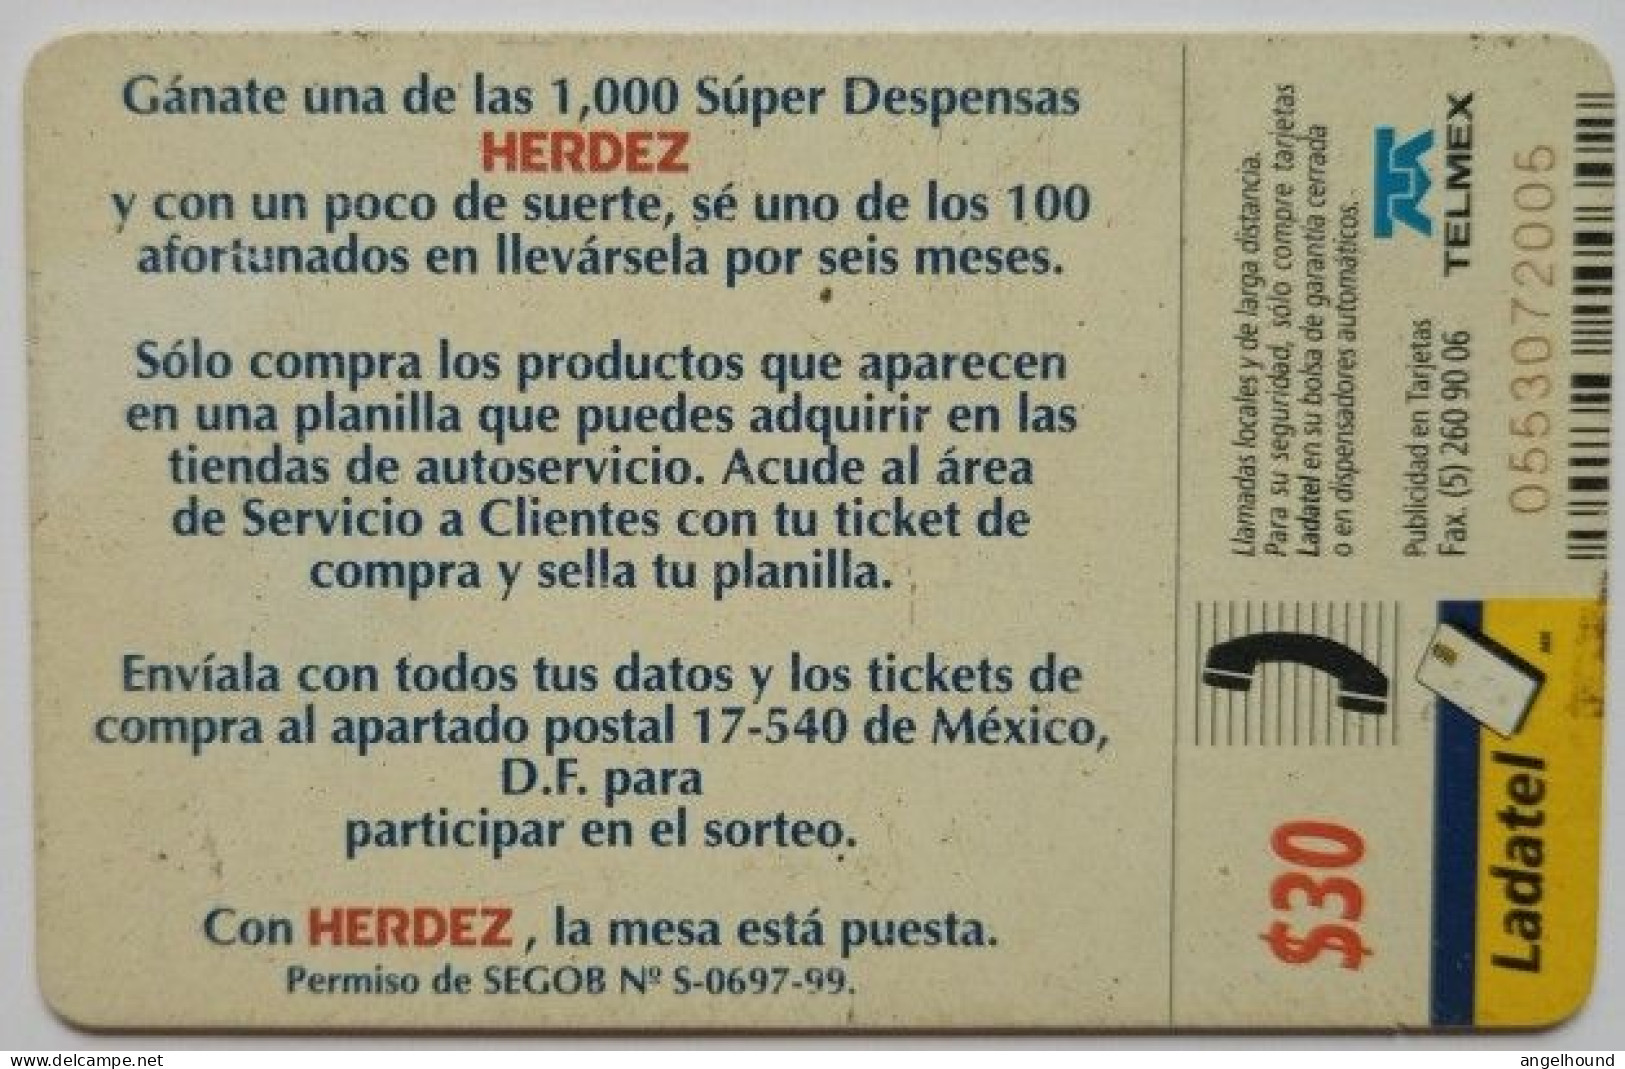 Mexico Ladatel $30 Chip Card - Herdez Despensa - Mexiko